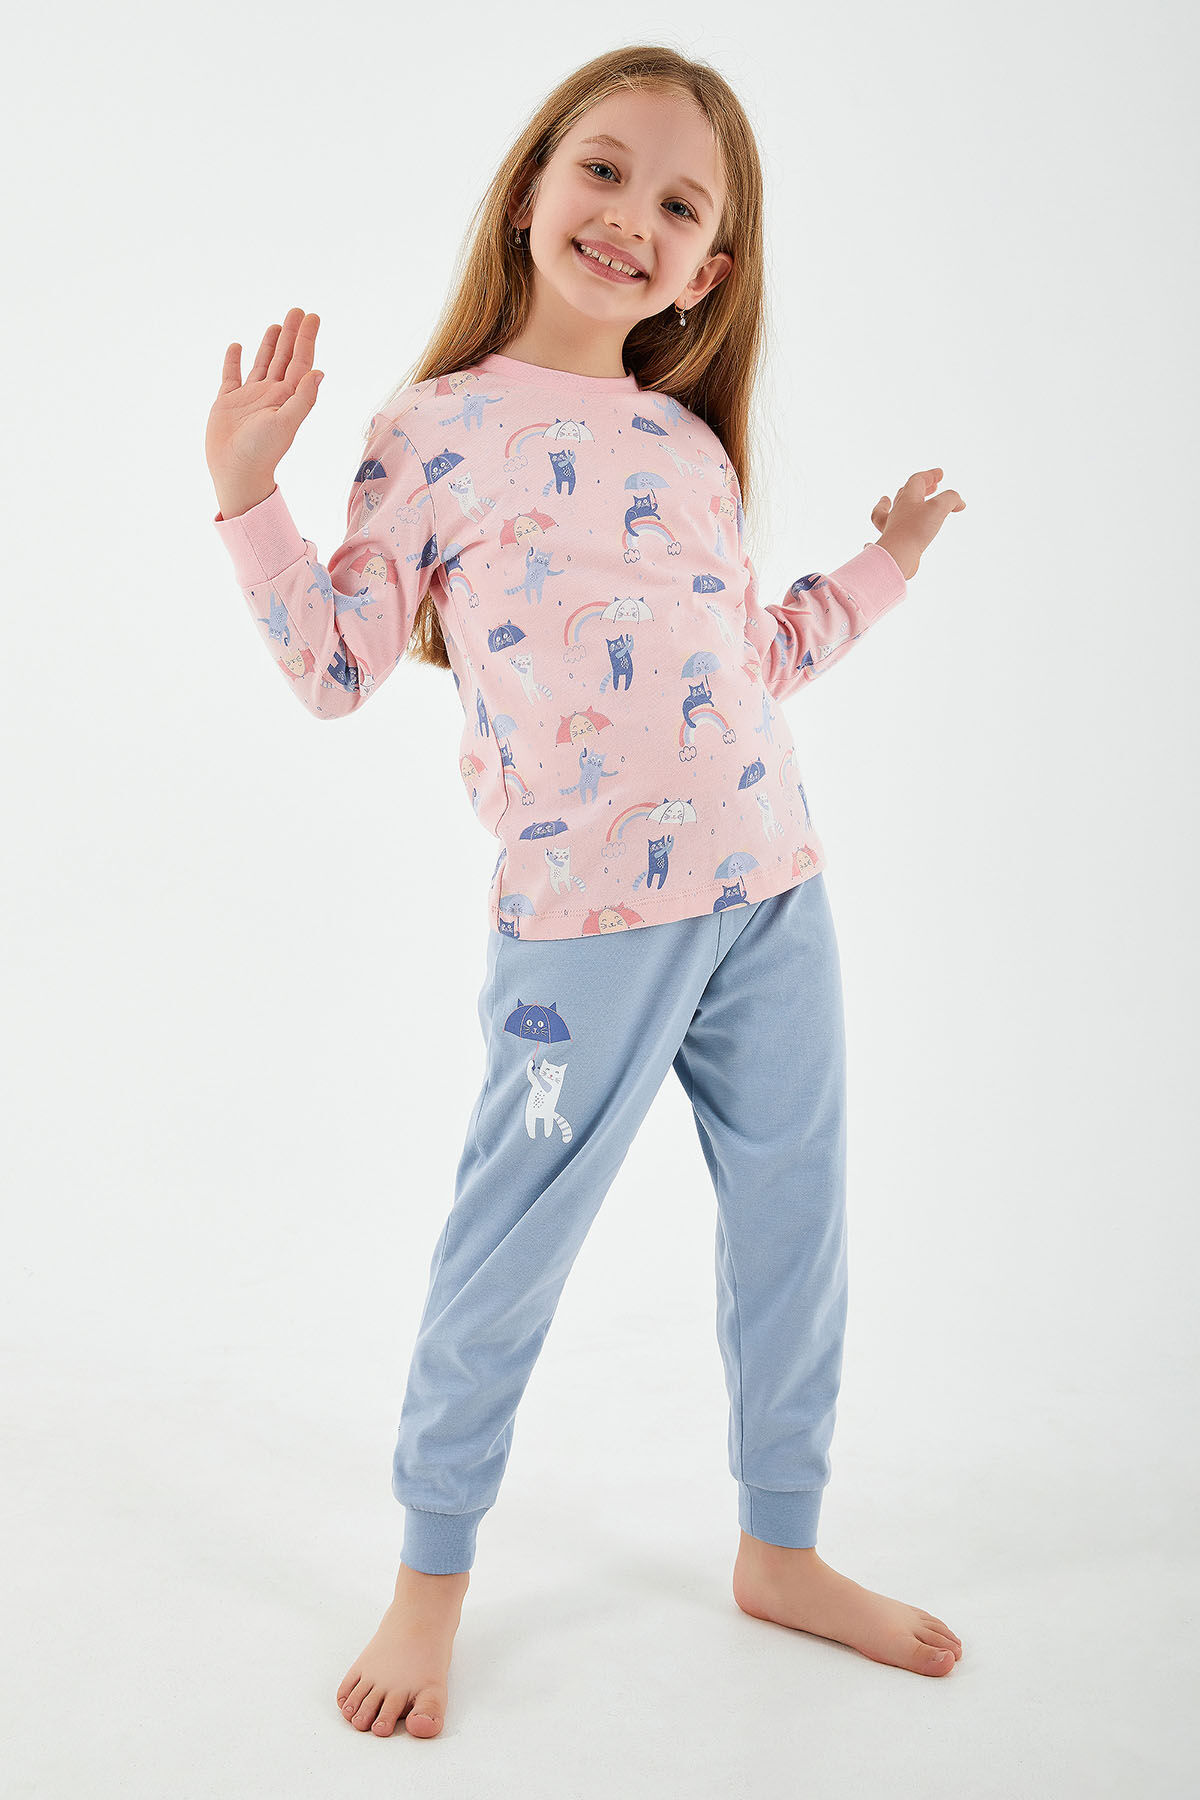 RolyPoly - RolyPoly Rainbow Pembe Kız Çocuk Uzun Kol Pijama Takım